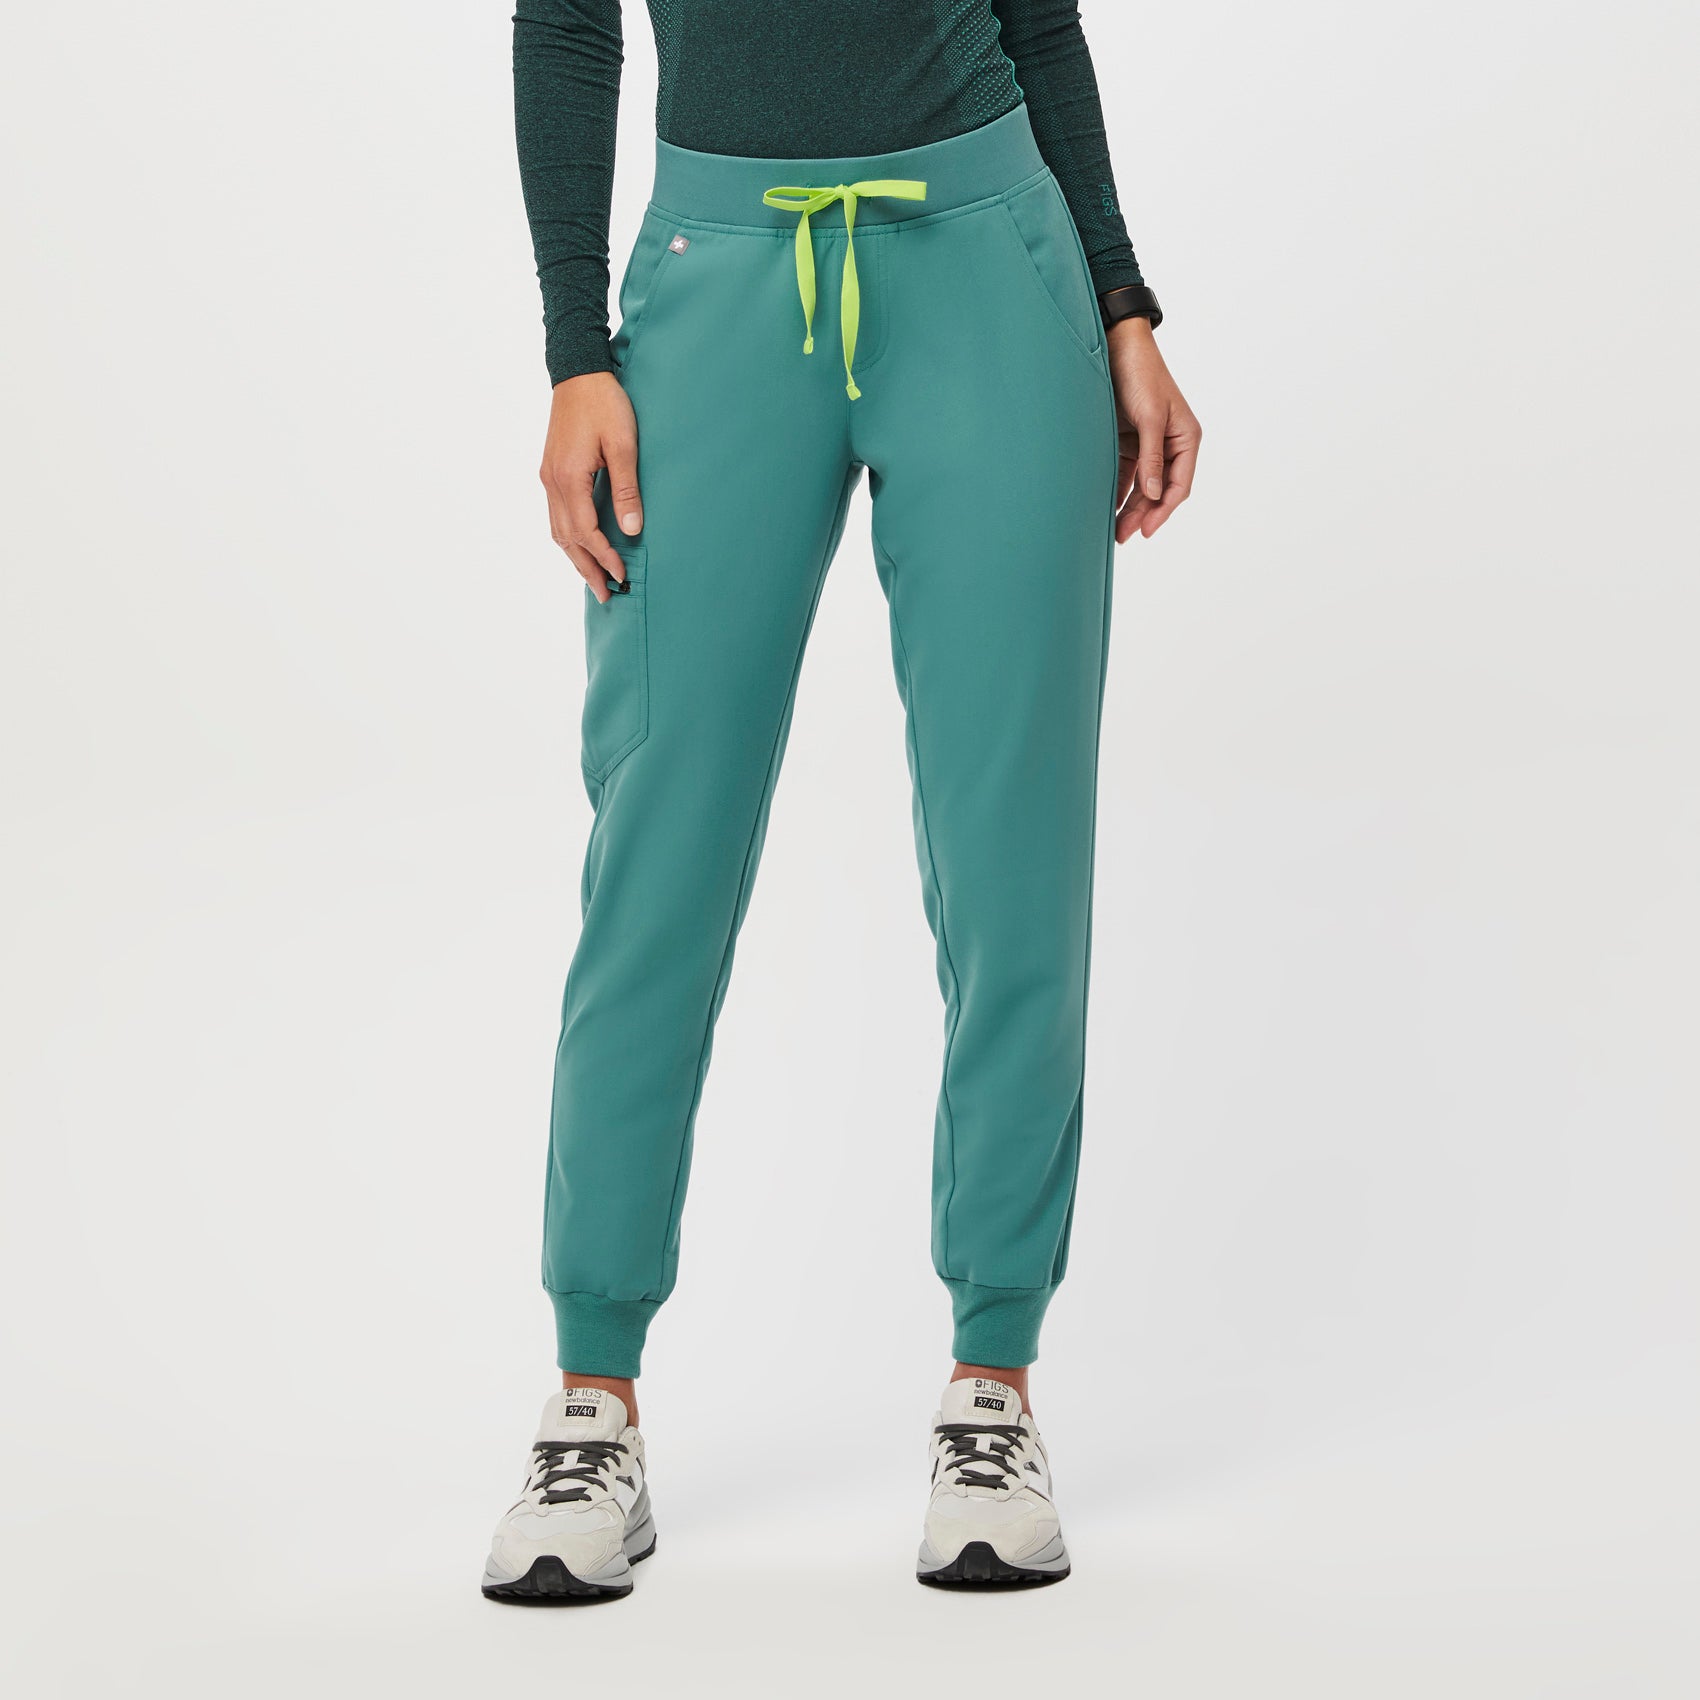 FIGS Zamora Jogger Style Scrub Pants for Women - Graphite 1.0, X-Large-Tall